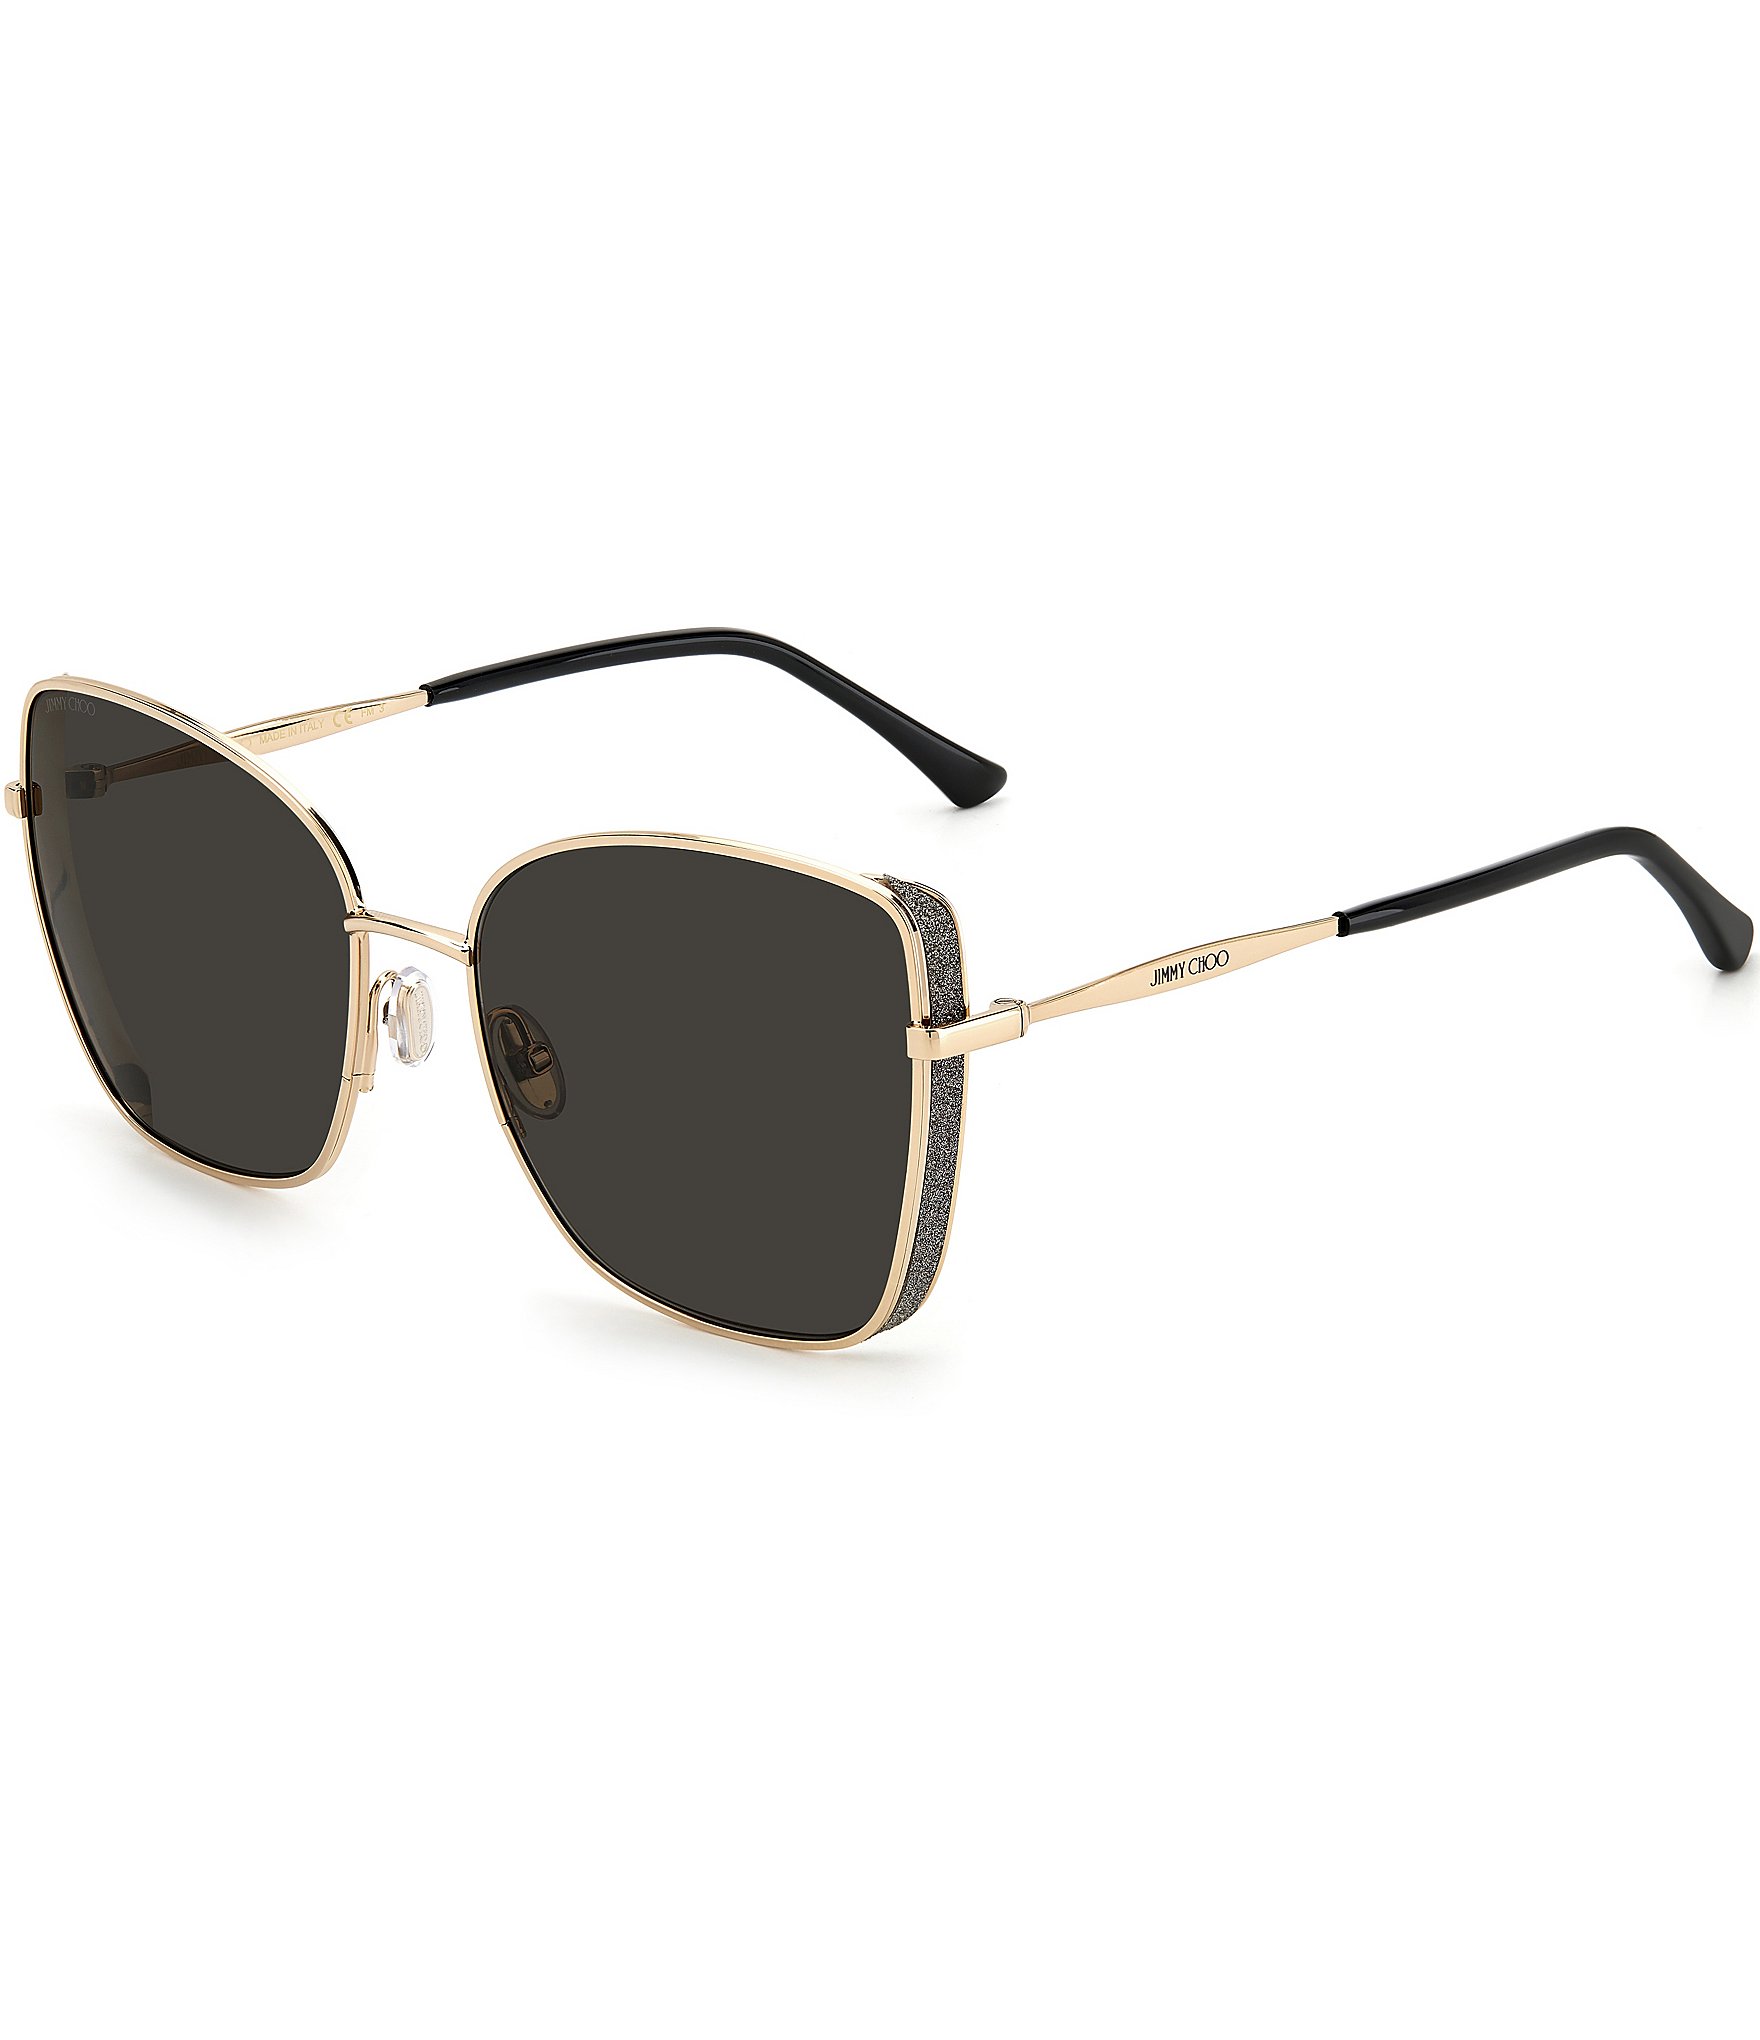 Jimmy Choo Womens Alexis Square 59mm Sunglasses Dillards 